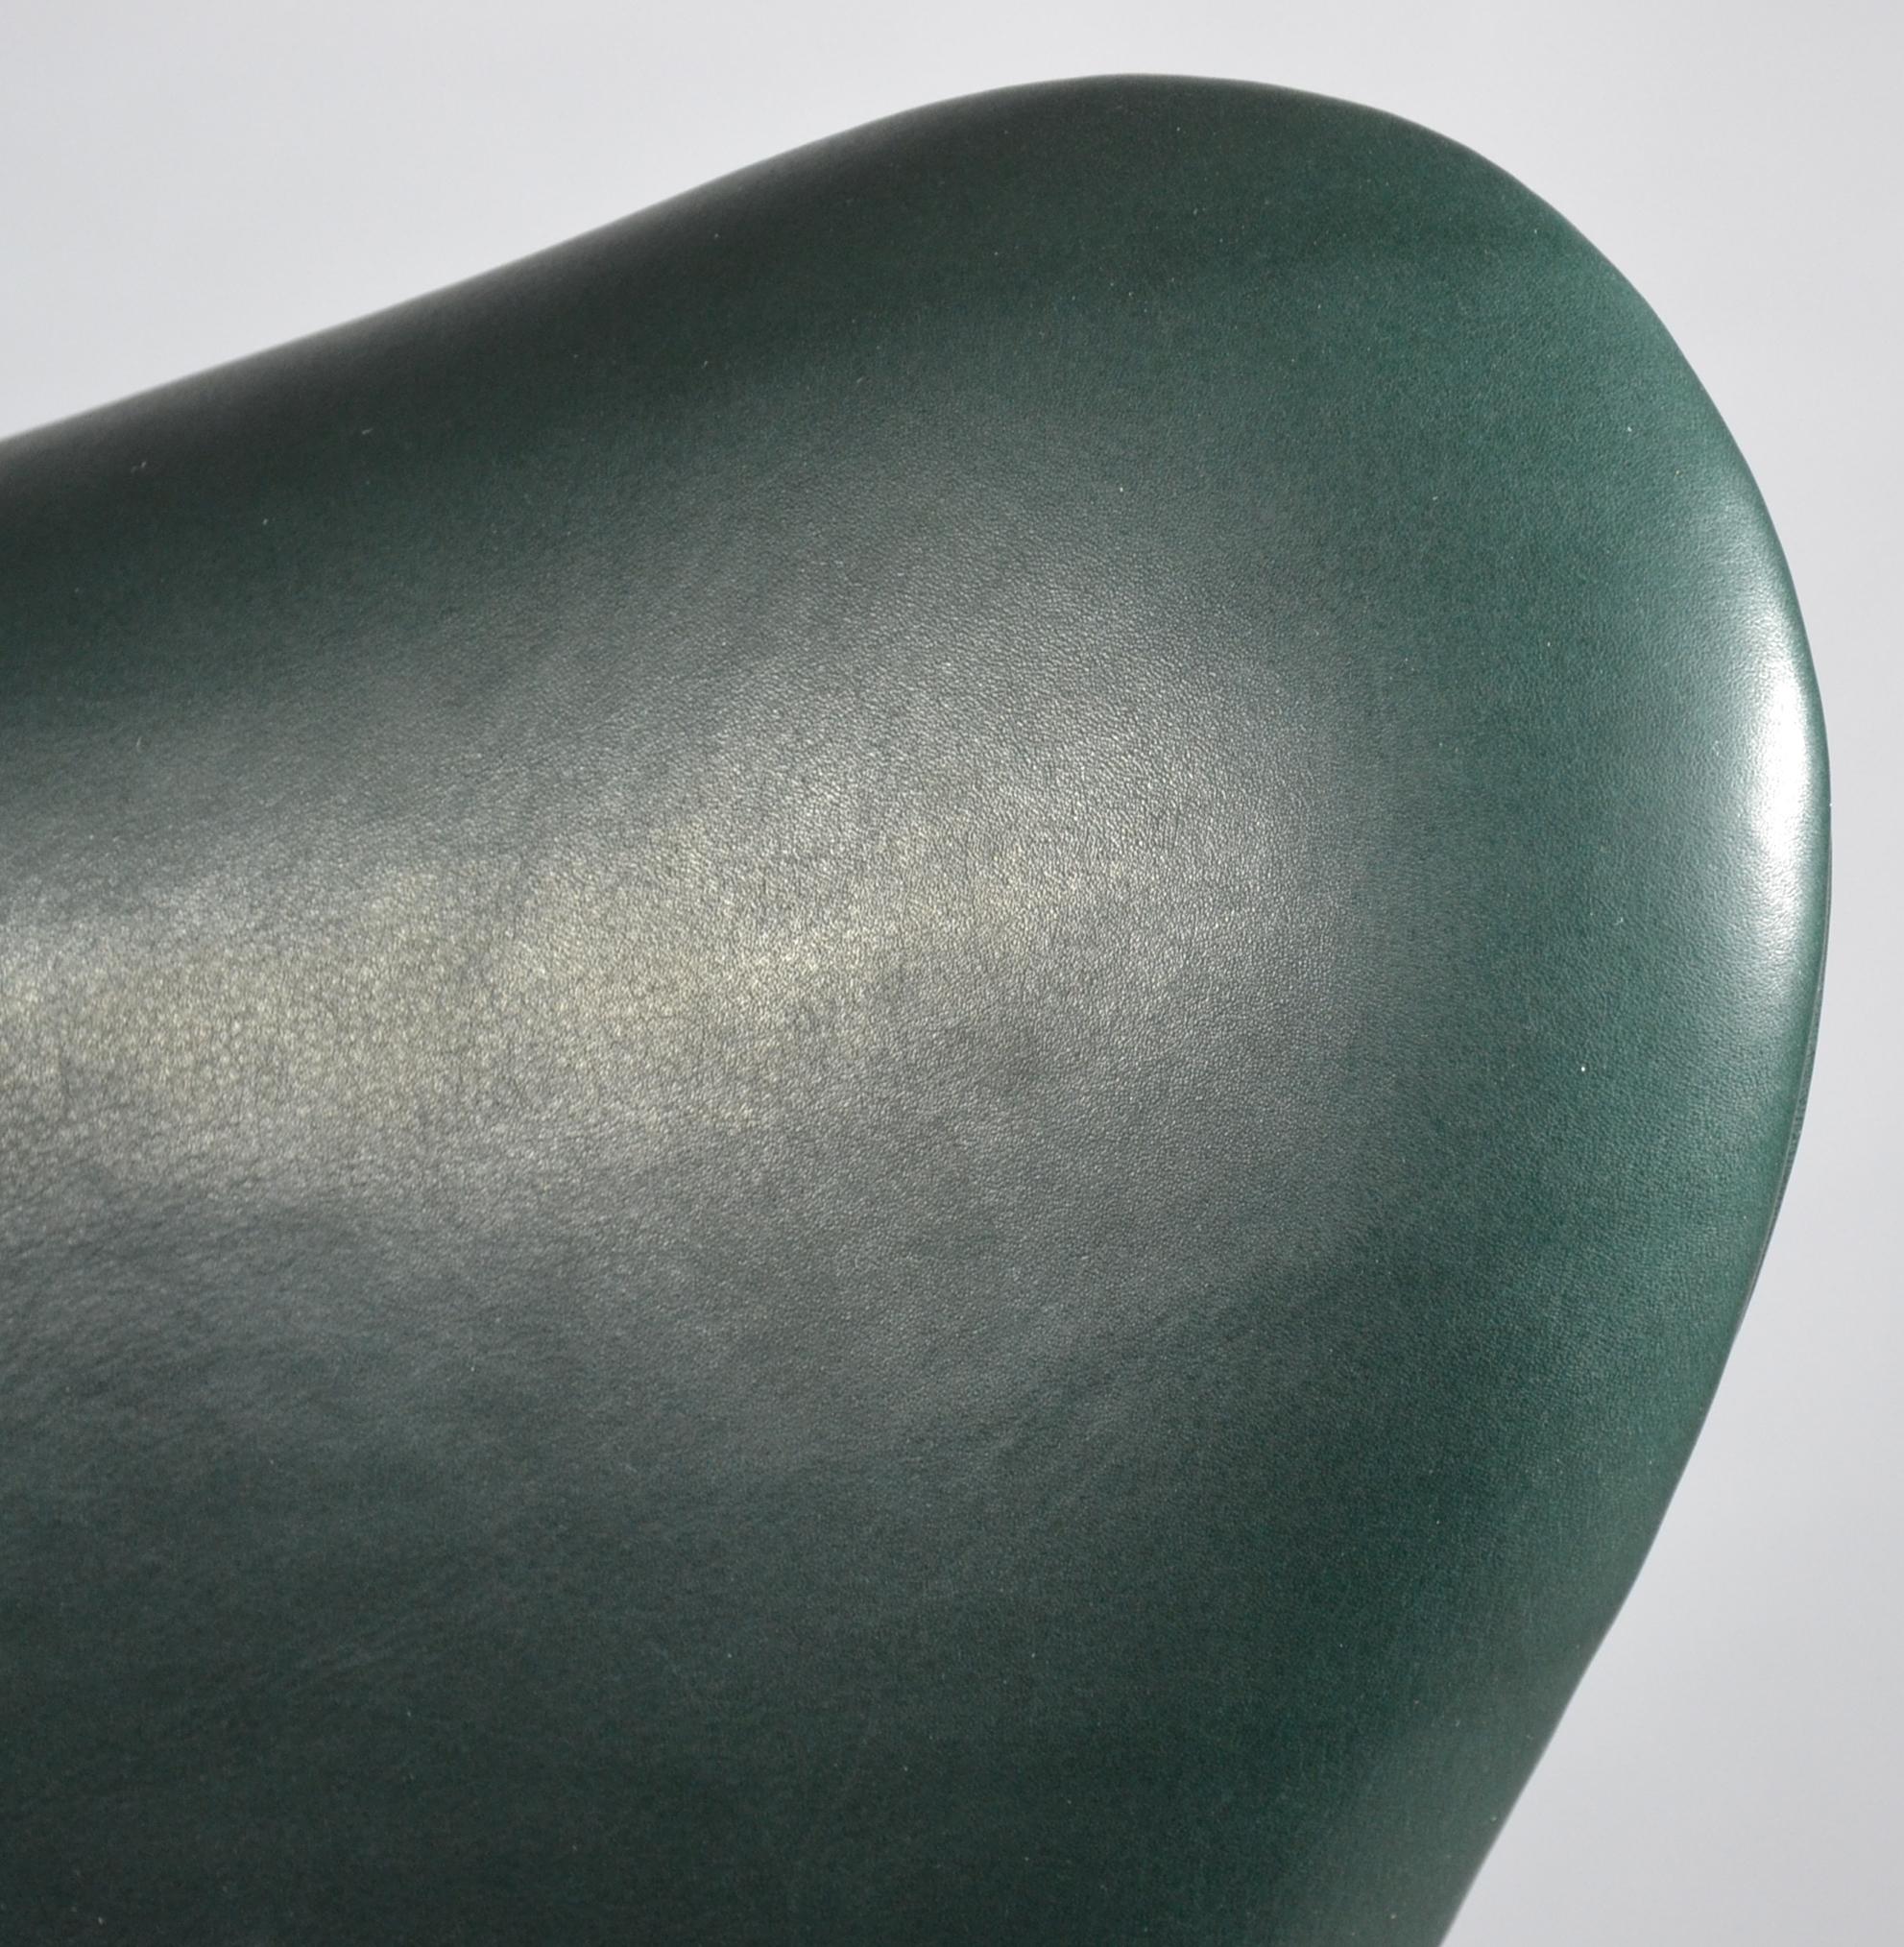 Aluminum Leather Egg Chair by Arne Jacobsen for Fritz Hansen, 1970s New Green Leather